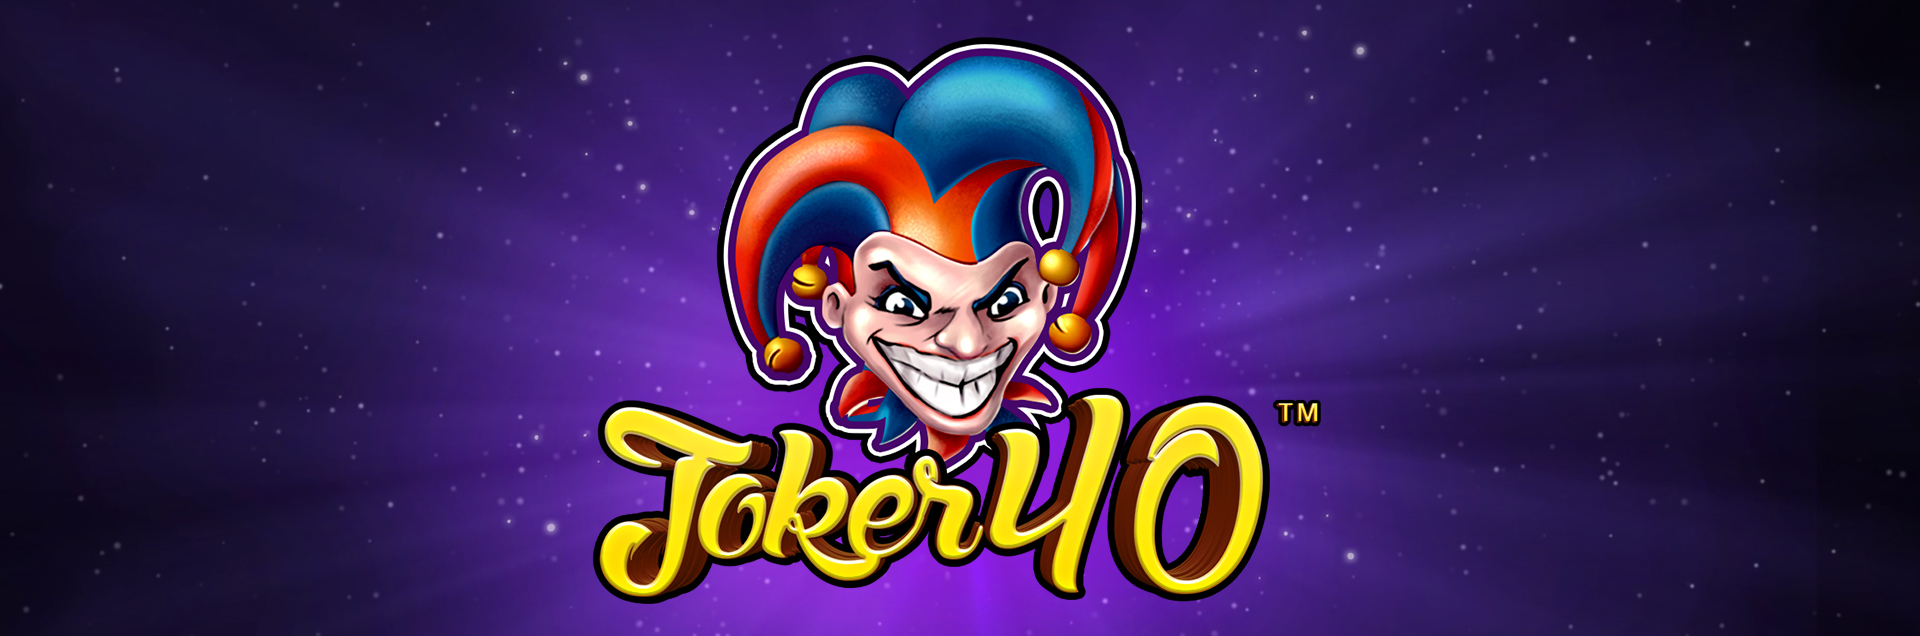 Joker40 Header image Games